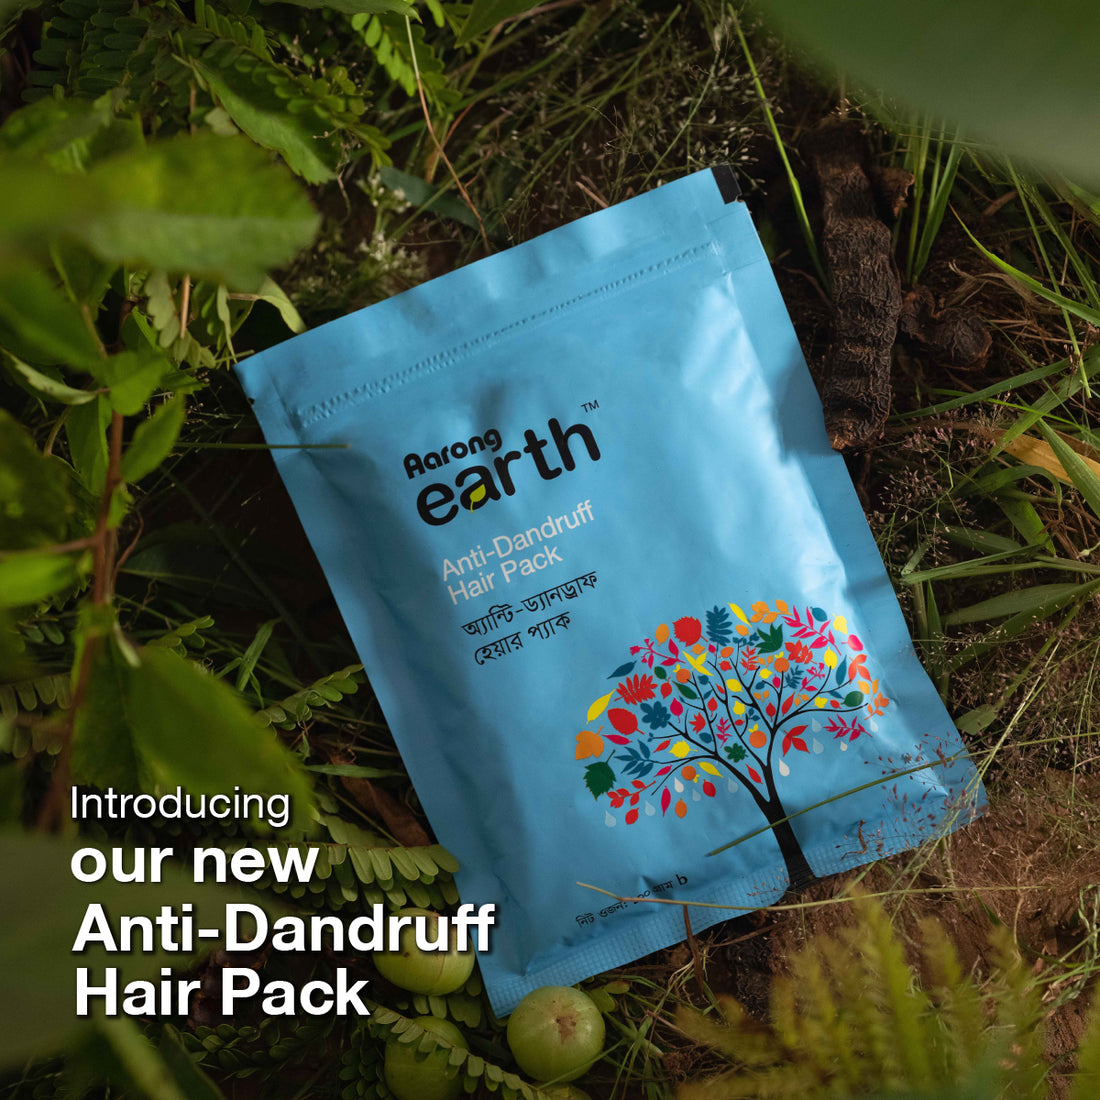 Aarong Earth Anti-Dandruff Hair Pack (100gm)